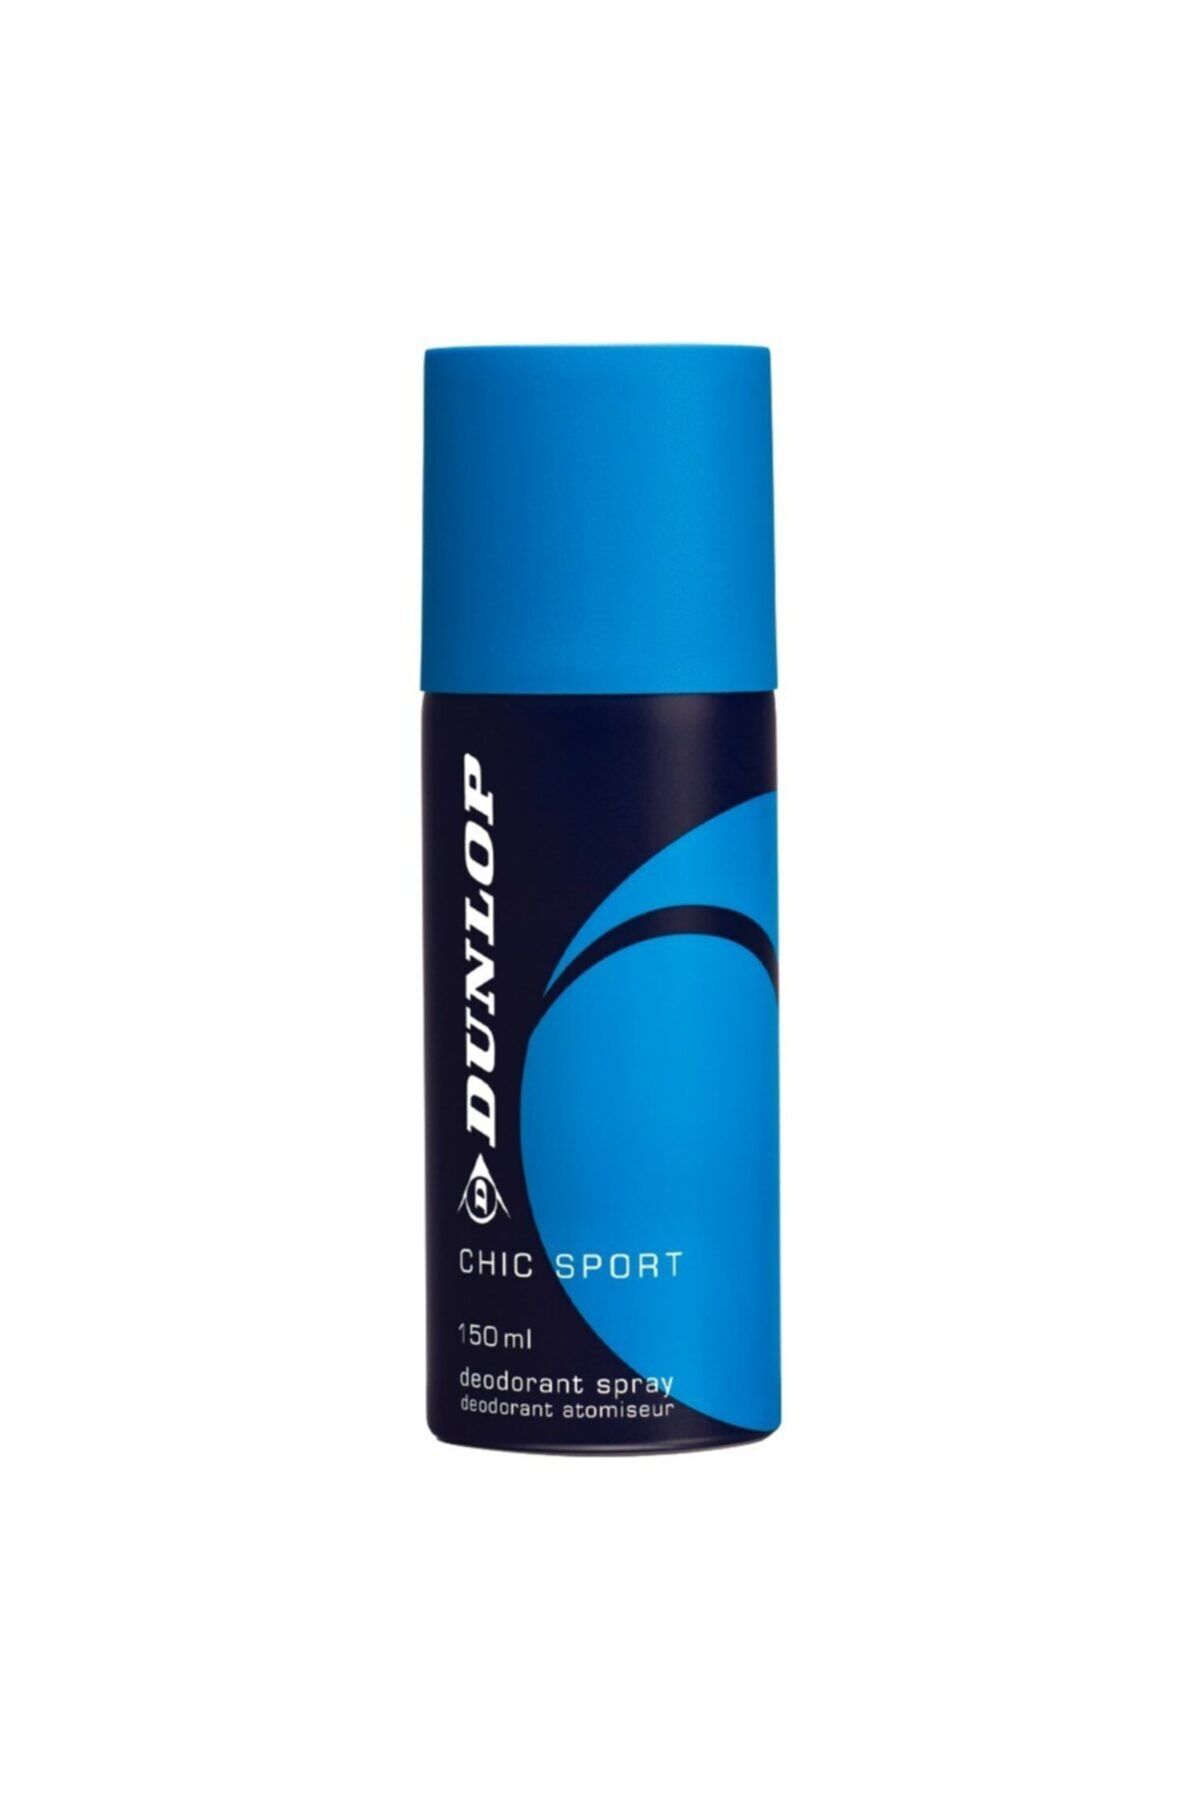 Dunlop Erkek Chic Sport Deodorant 150 ml